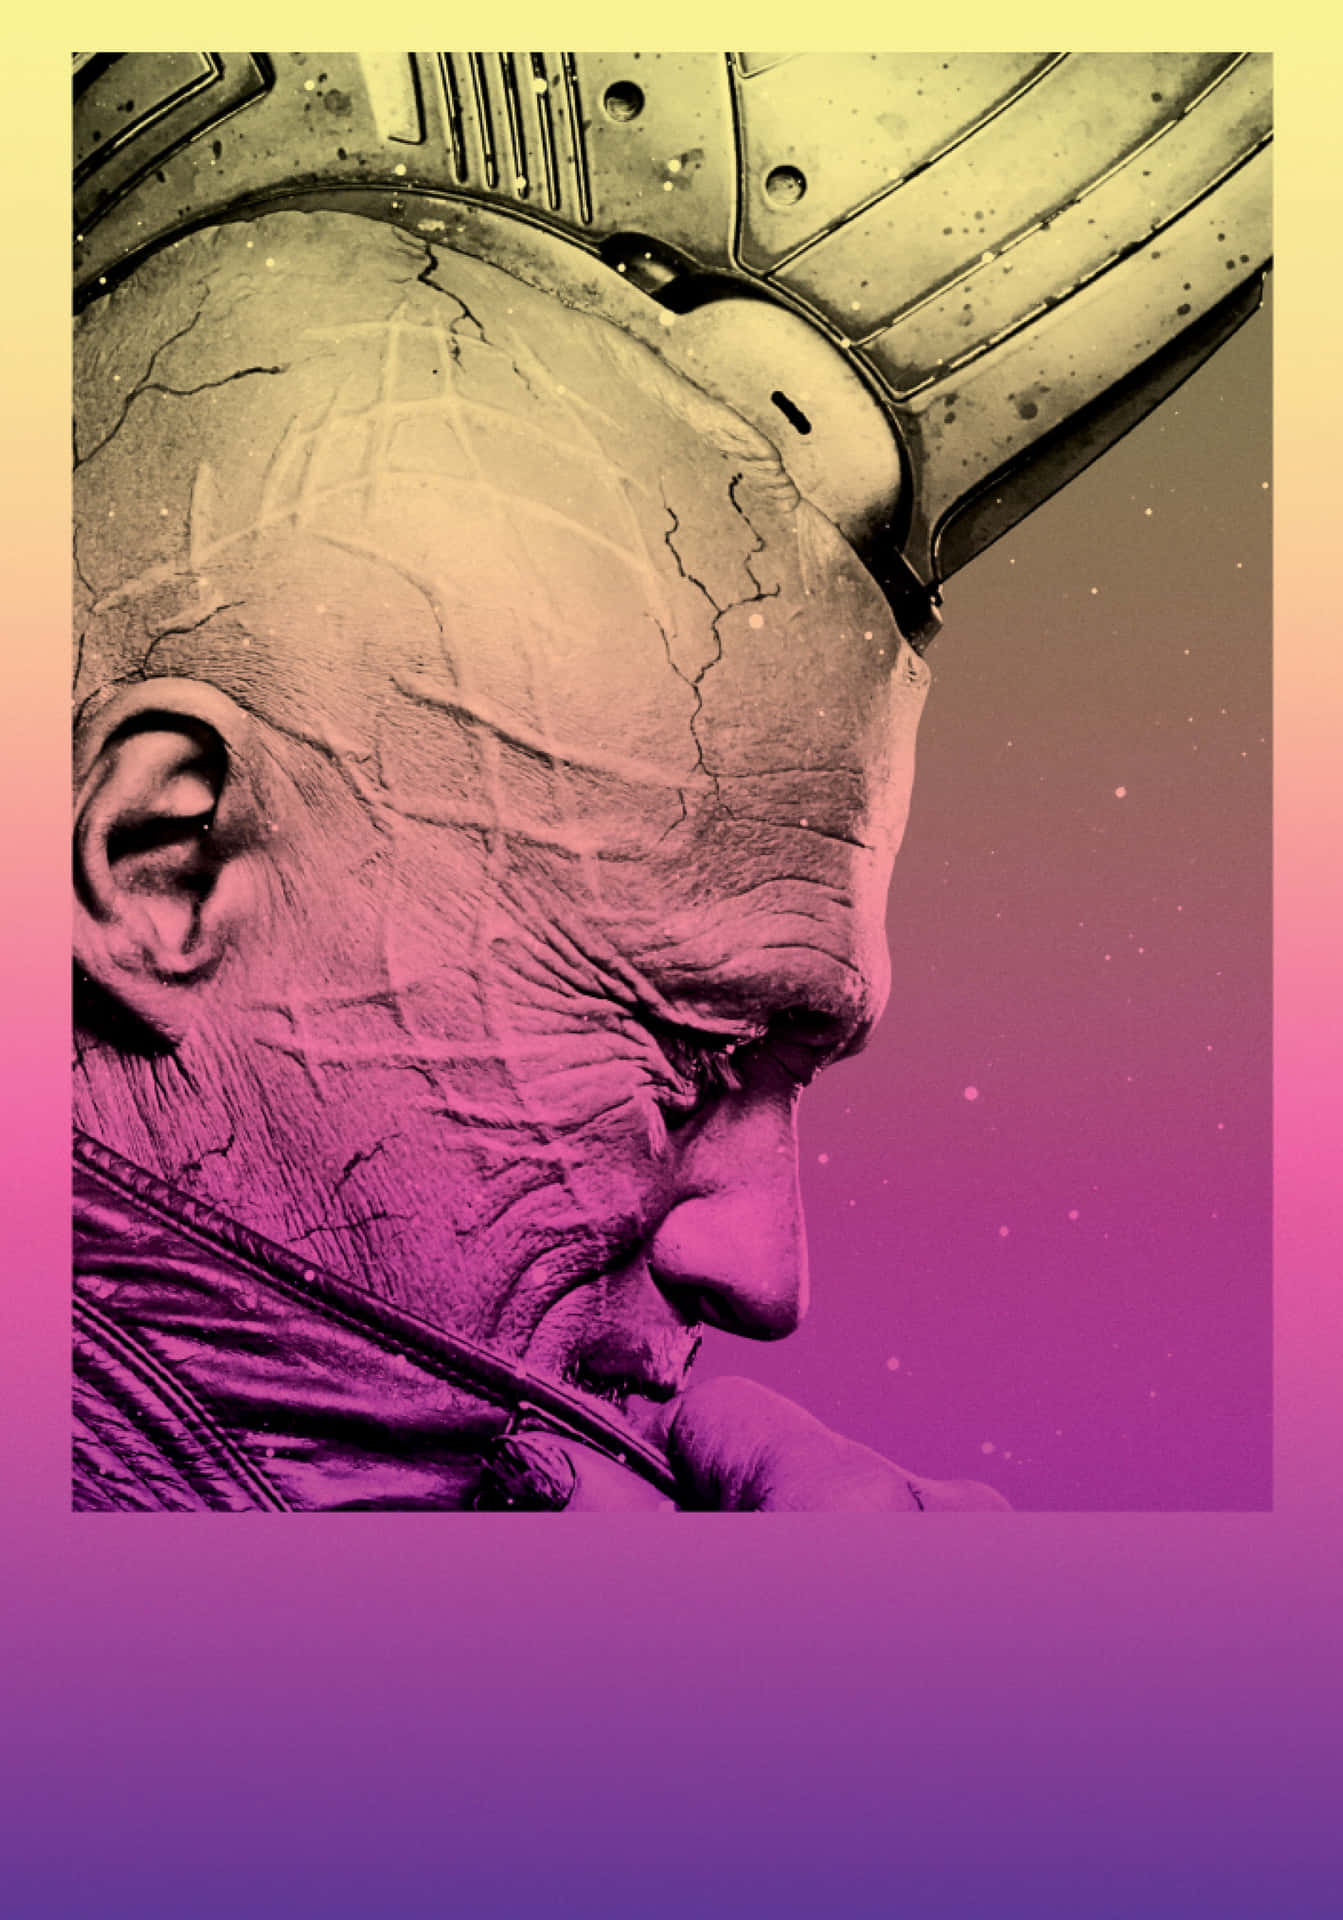 Guardian of the Galaxy: Yondu in Full Glory Wallpaper